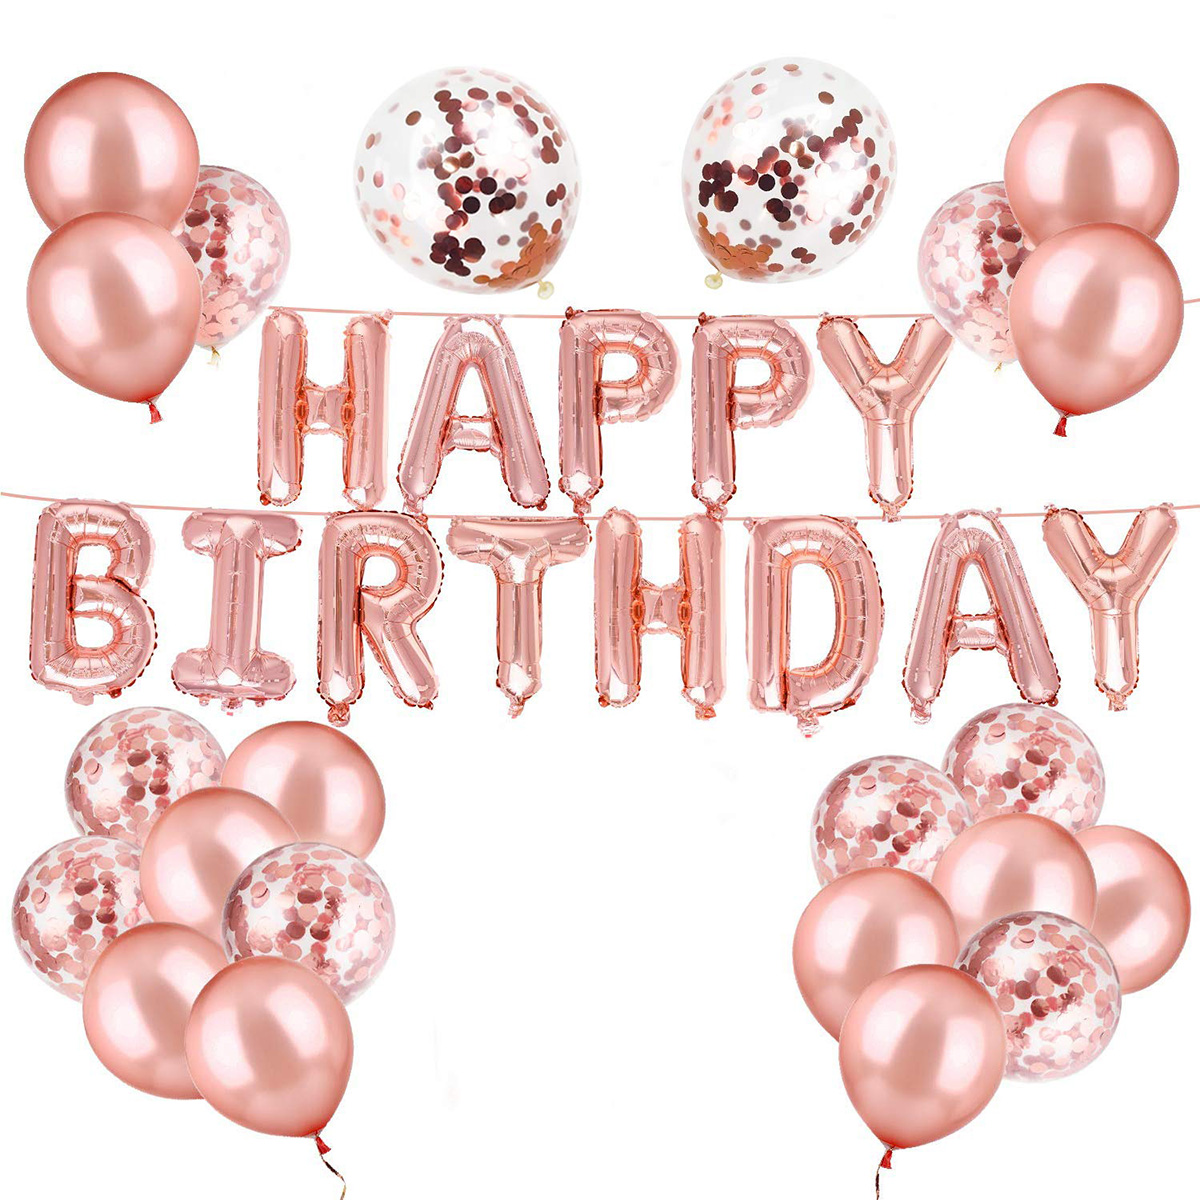 quotHappy-Birthdayquot-Aluminum-Foil-Balloon-Confetti-Birthday-Decoration-Set-For-Birthday-Party-Dec-1926326-3